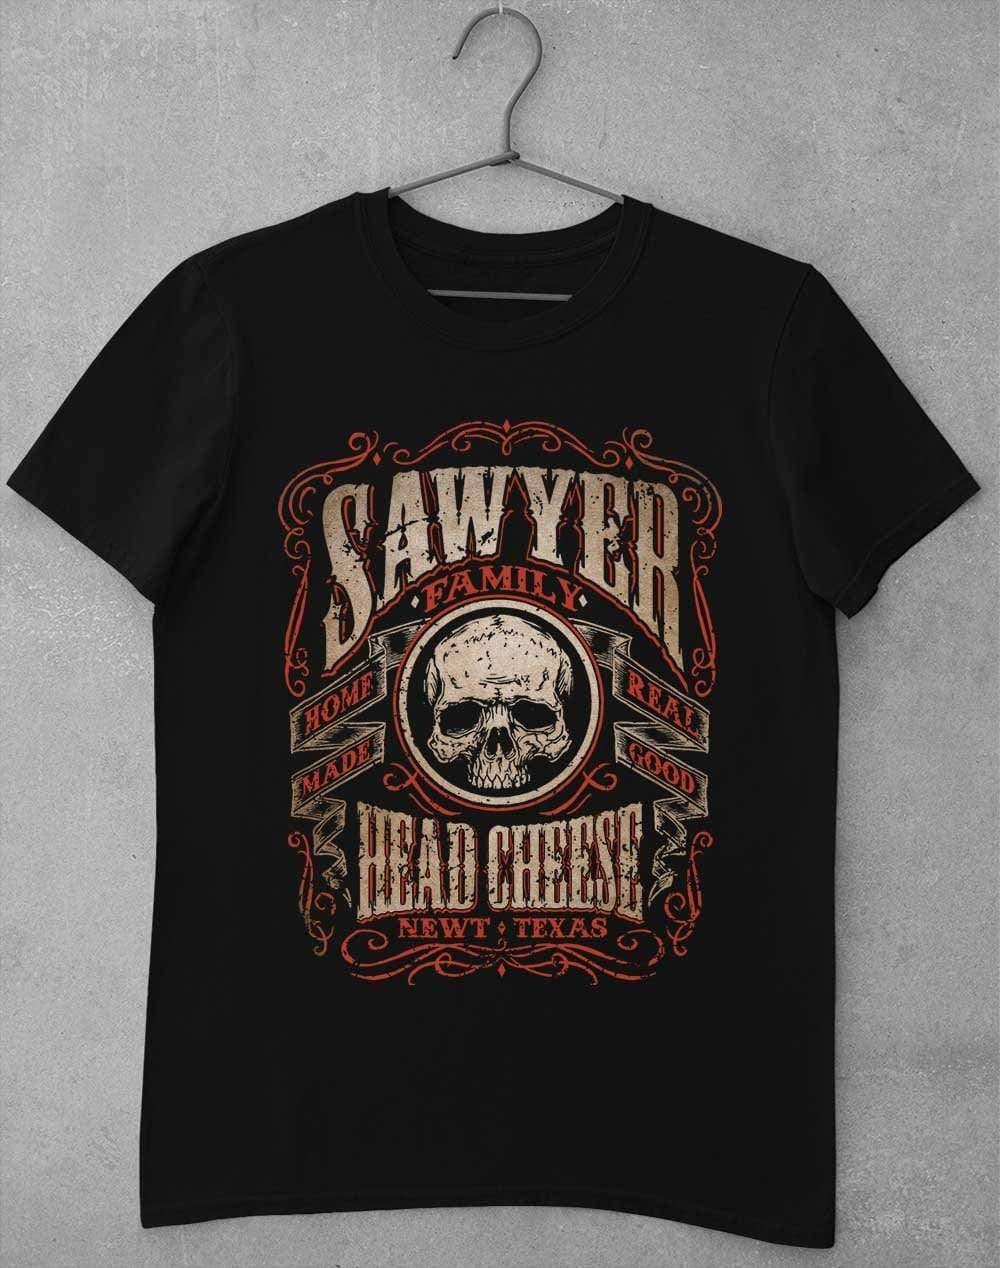 Sawyer Family Head Cheese T-Shirt S / Black  - Off World Tees